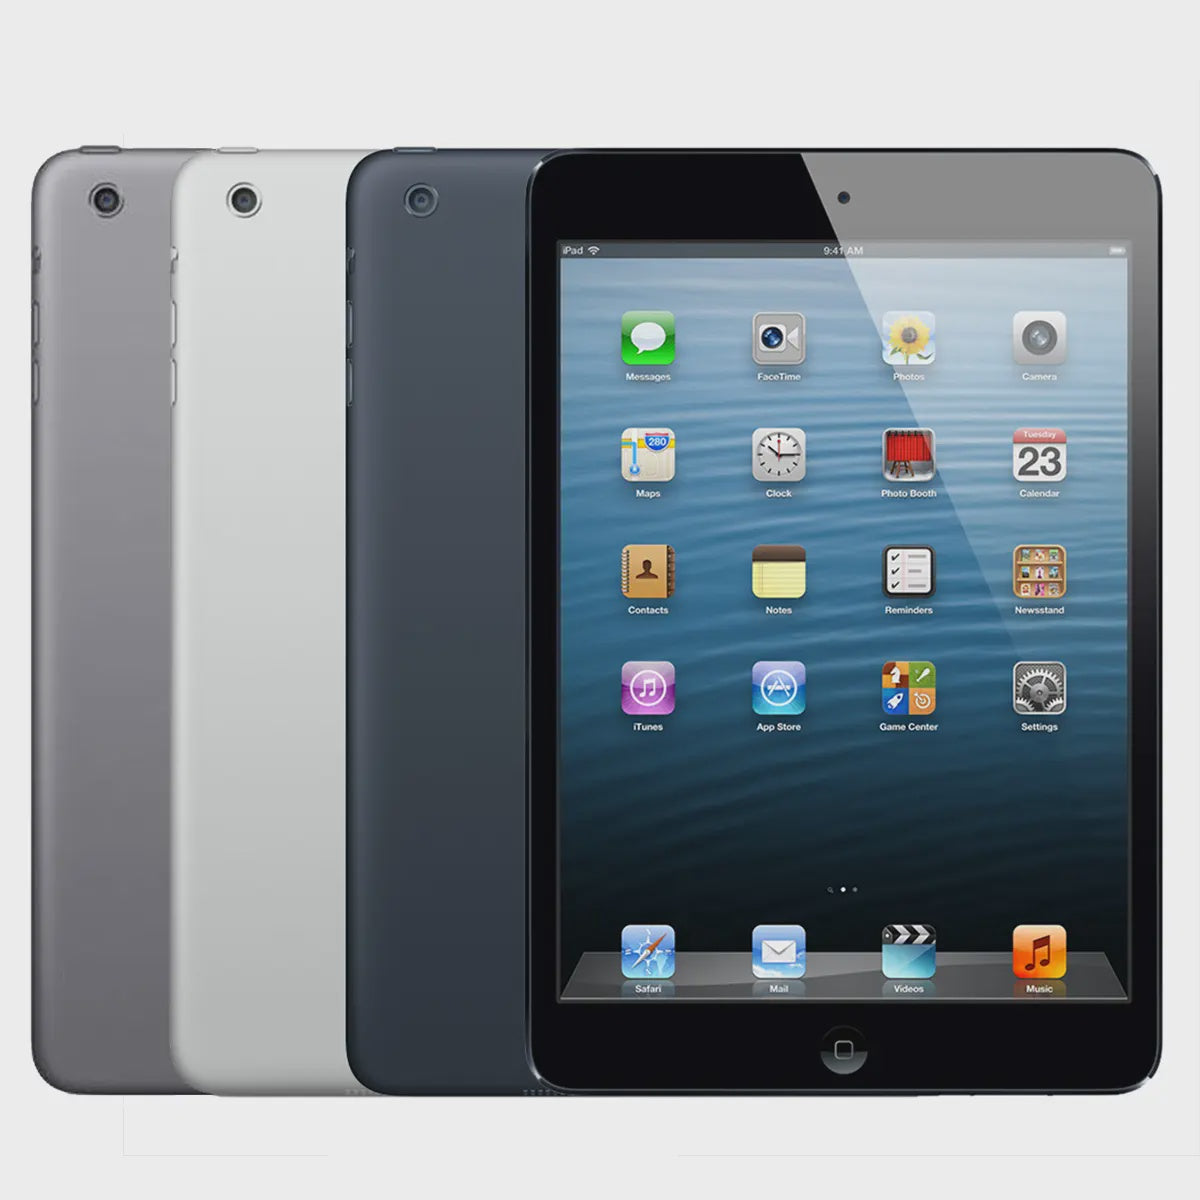 Apple iPad Mini 1 7.9" | A1432 | WiFi | Back Light Screen